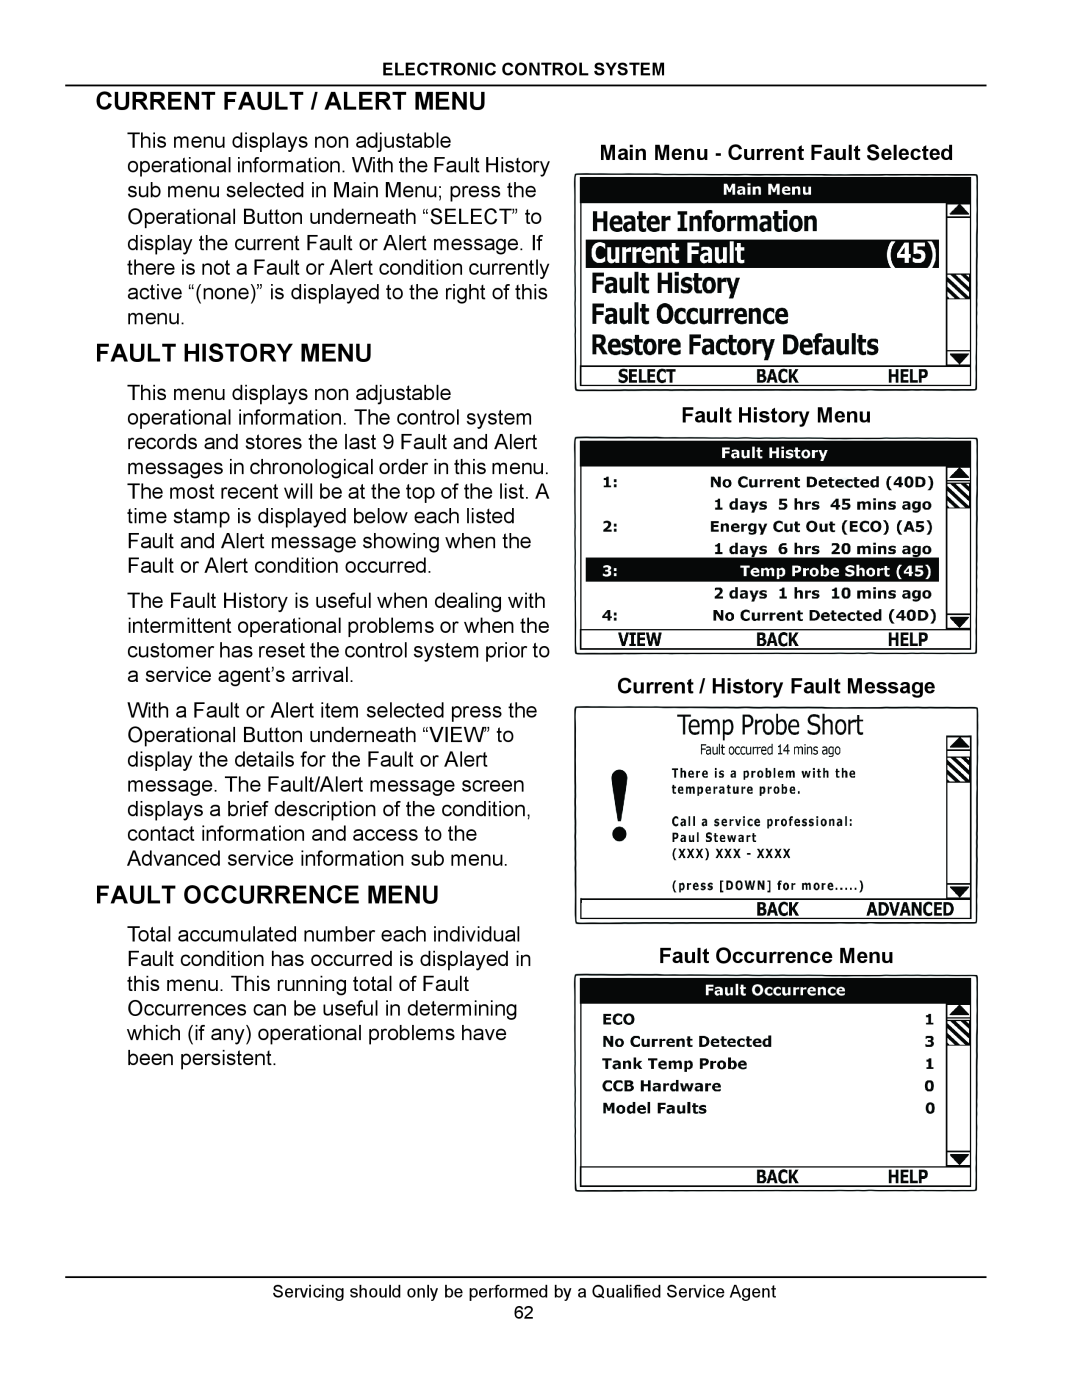 American Water Heater ITCE3-52/80/119 manual Current Fault / Alert Menu, Fault History Menu, Fault Occurrence Menu 